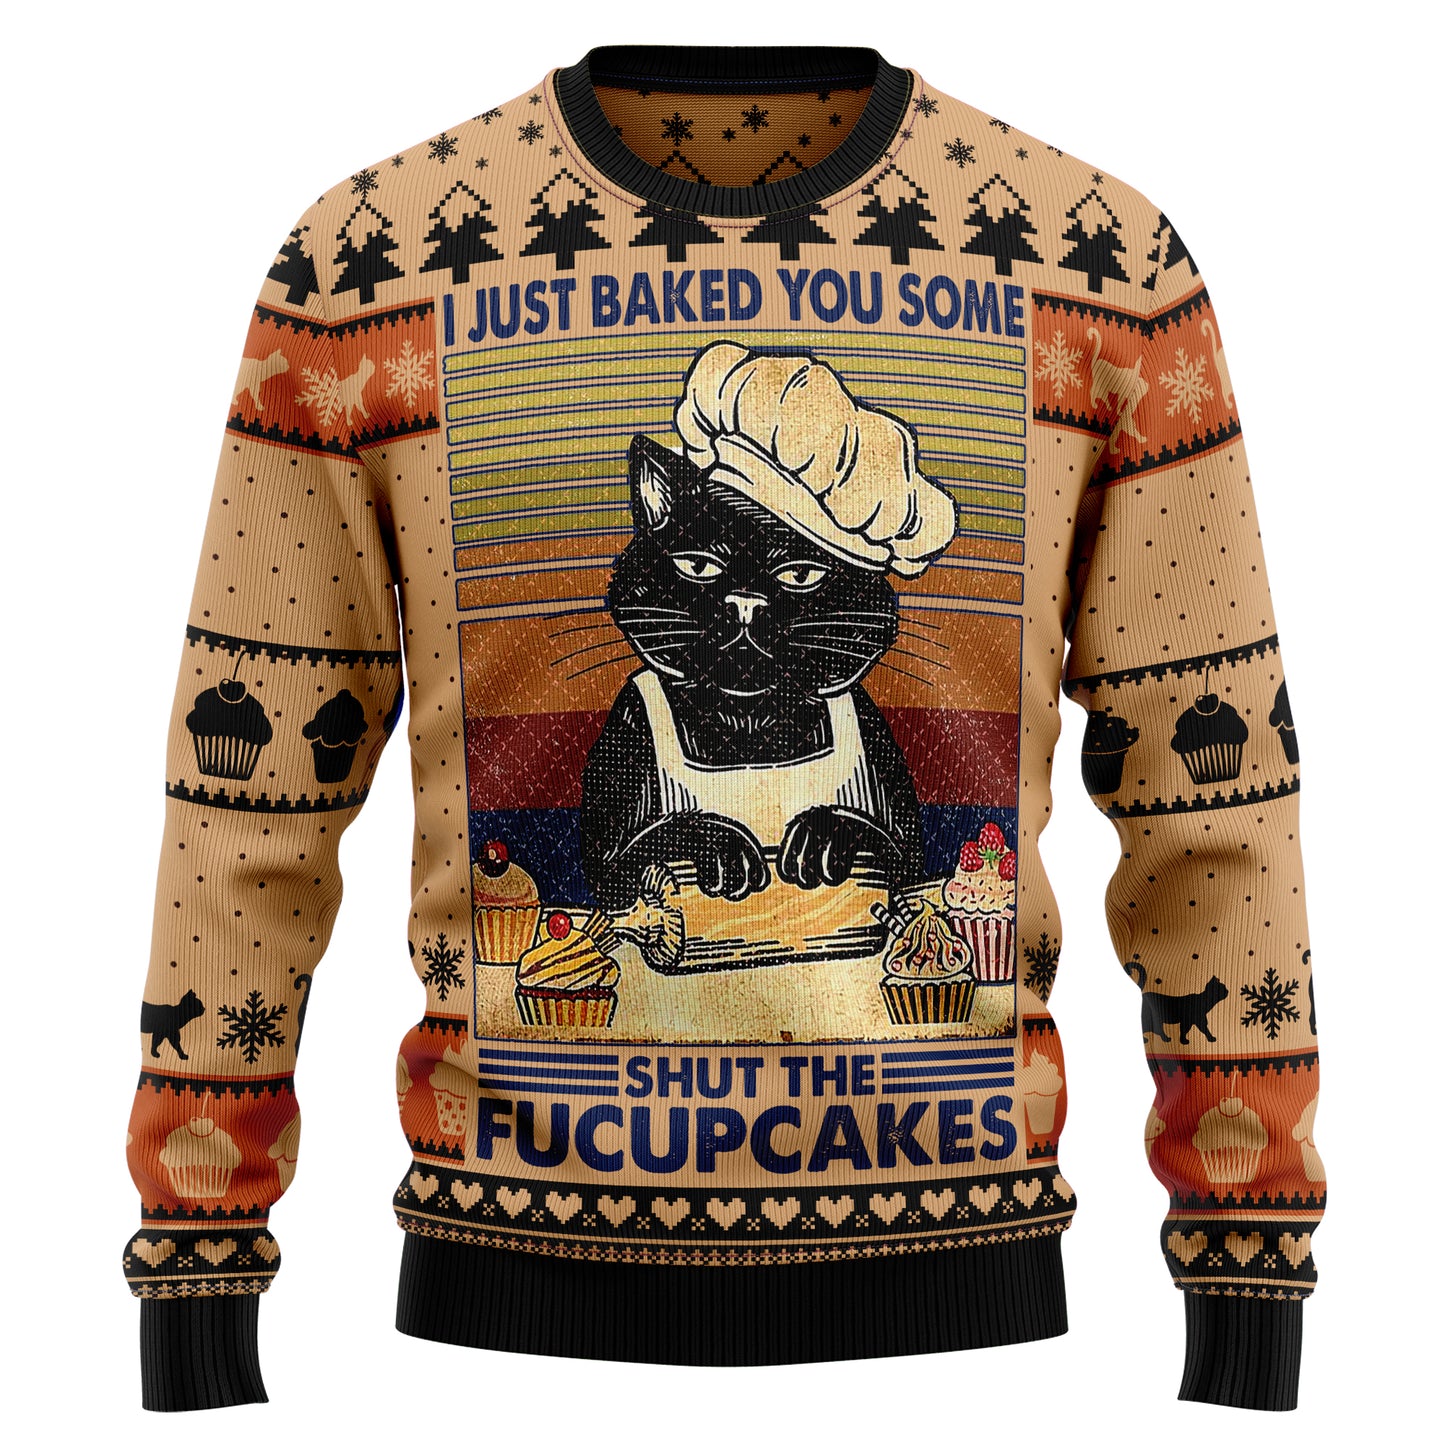 Shut The Fucupcakes Christmas TG5113 Ugly Christmas Sweater